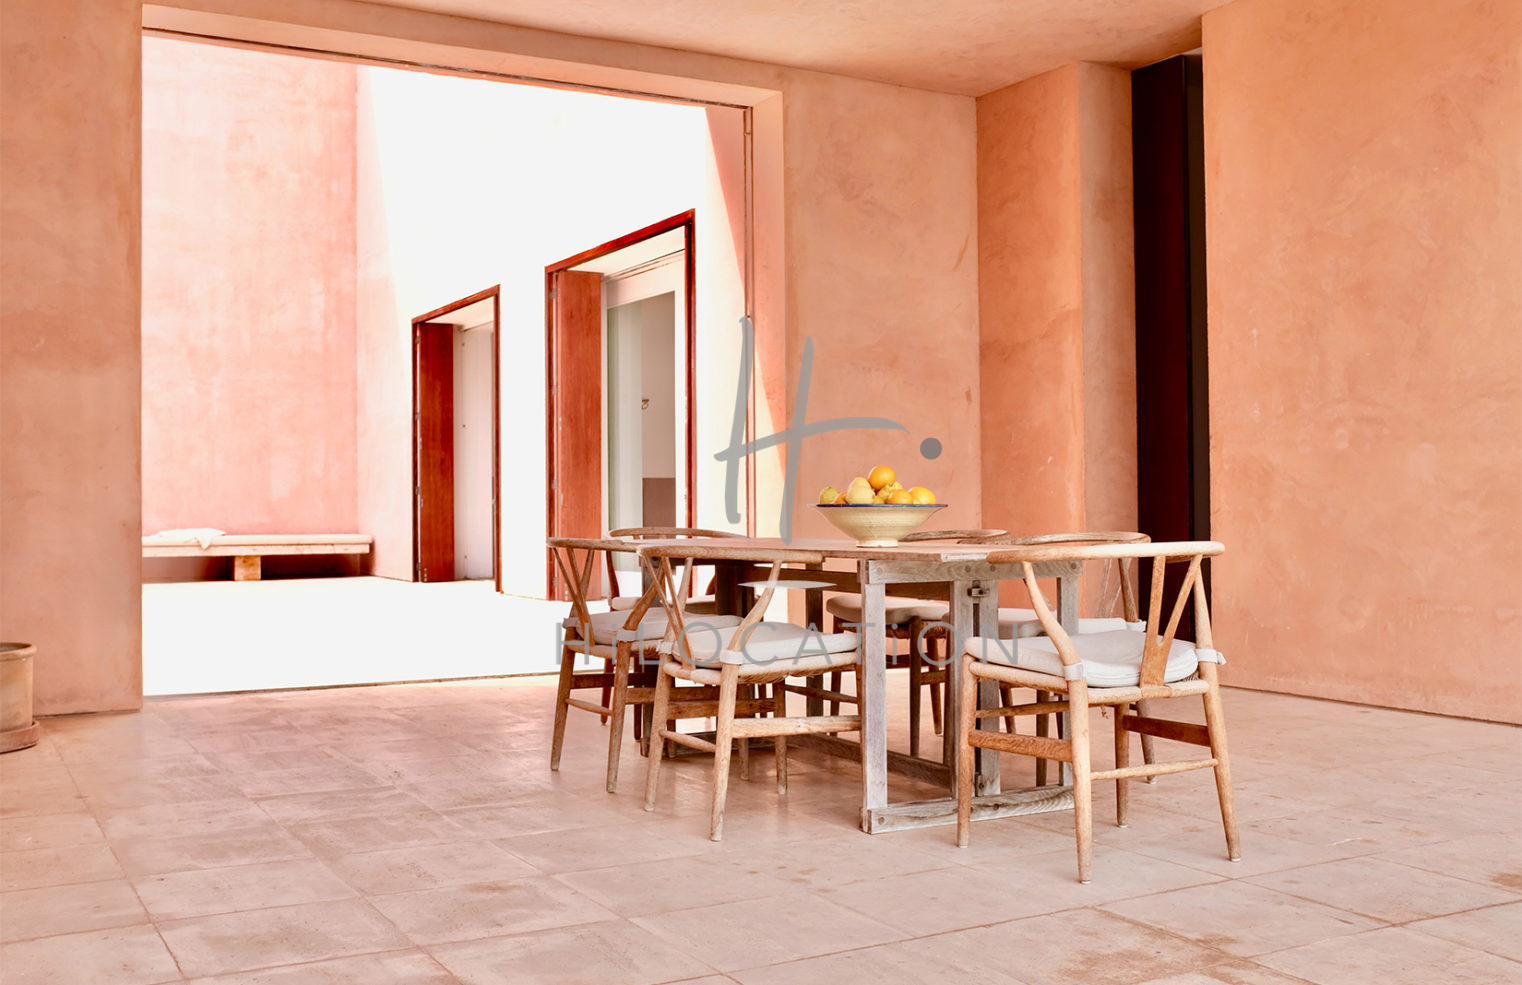 Mallorca John Pawson Villa For Rent Homepage Crop 1522×985